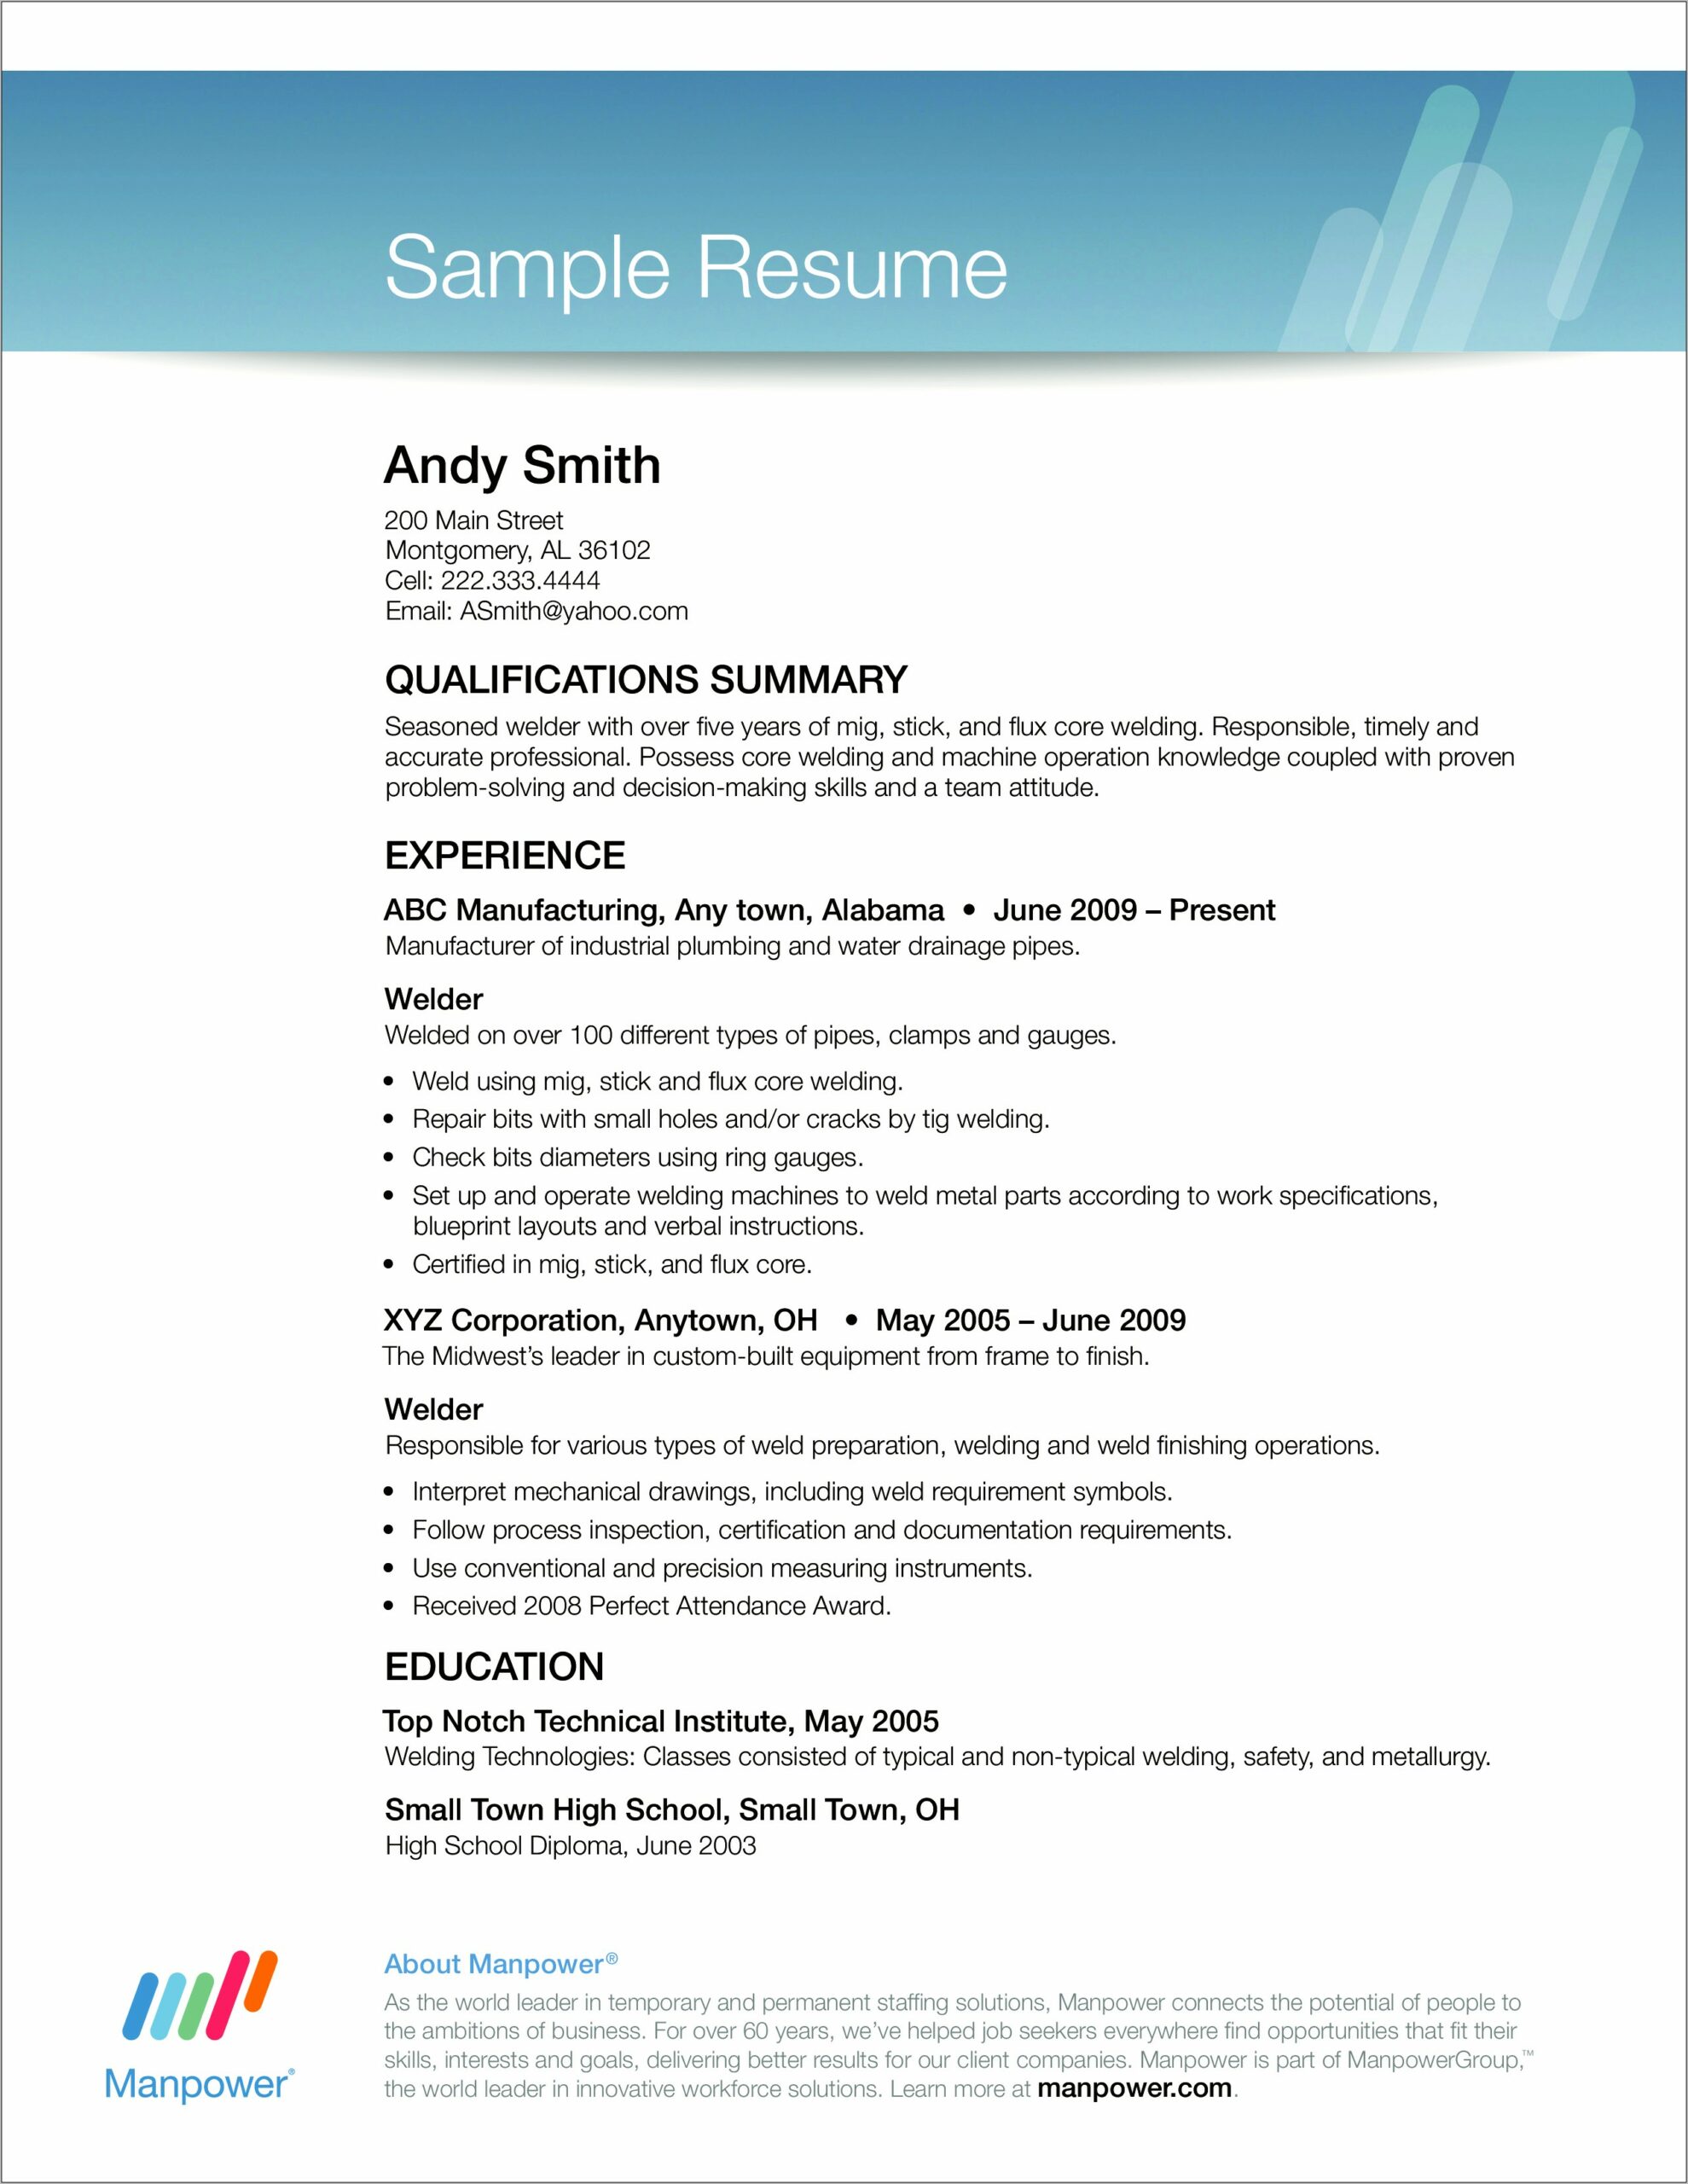 Simple Blank Job Application Resume Format Resume Example Gallery